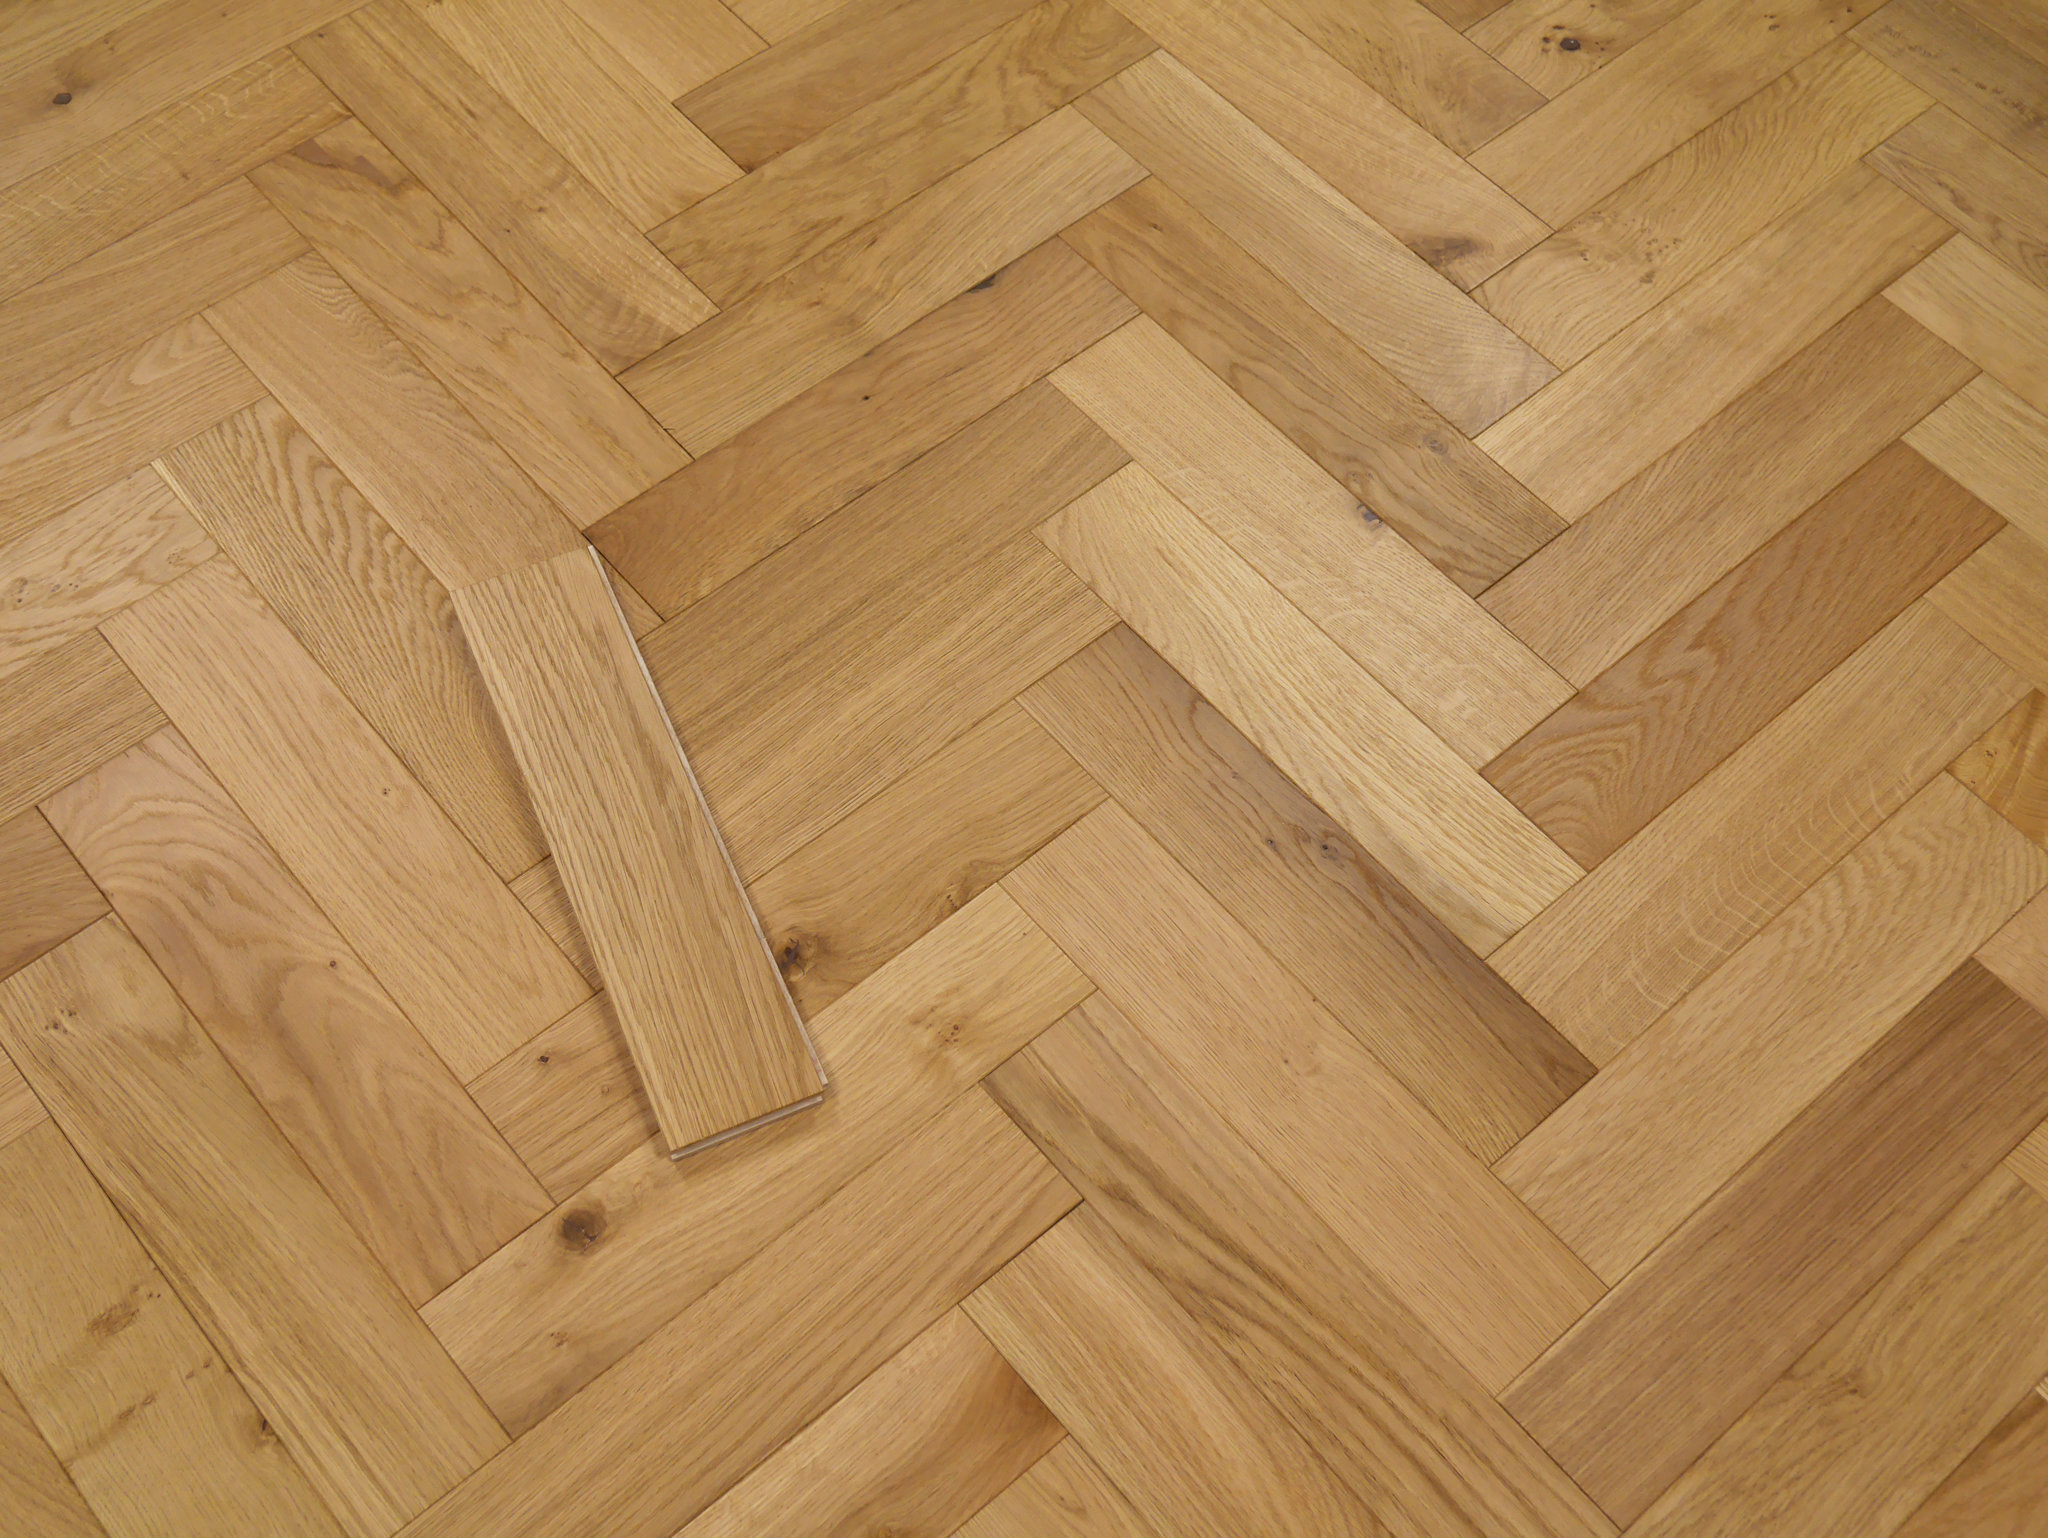 Timbercraft Herringbone Engineered Oak Parquet Flooring, Brushed & Oiled, 90x4x400 Mm image